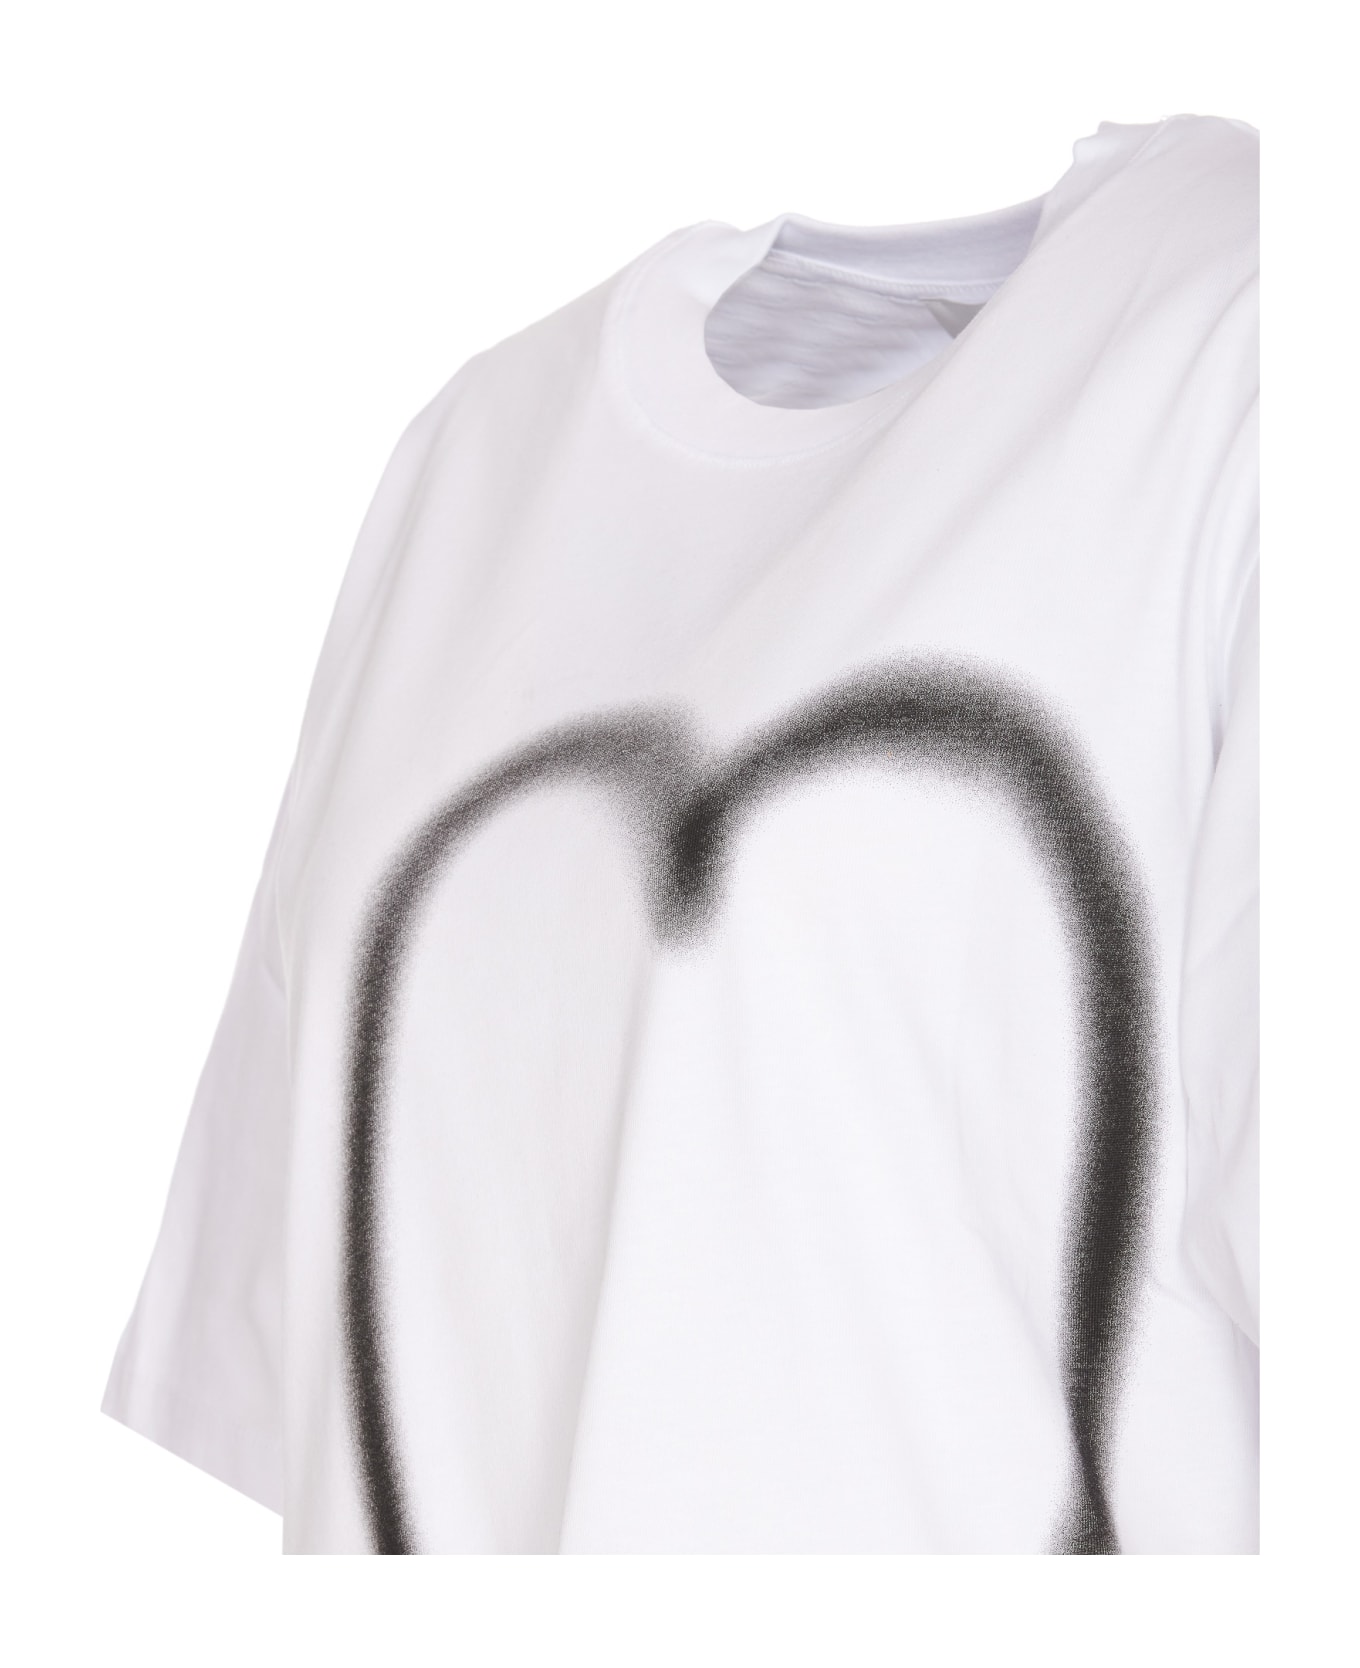 SportMax Jersey T-shirt Heart Print - White Tシャツ